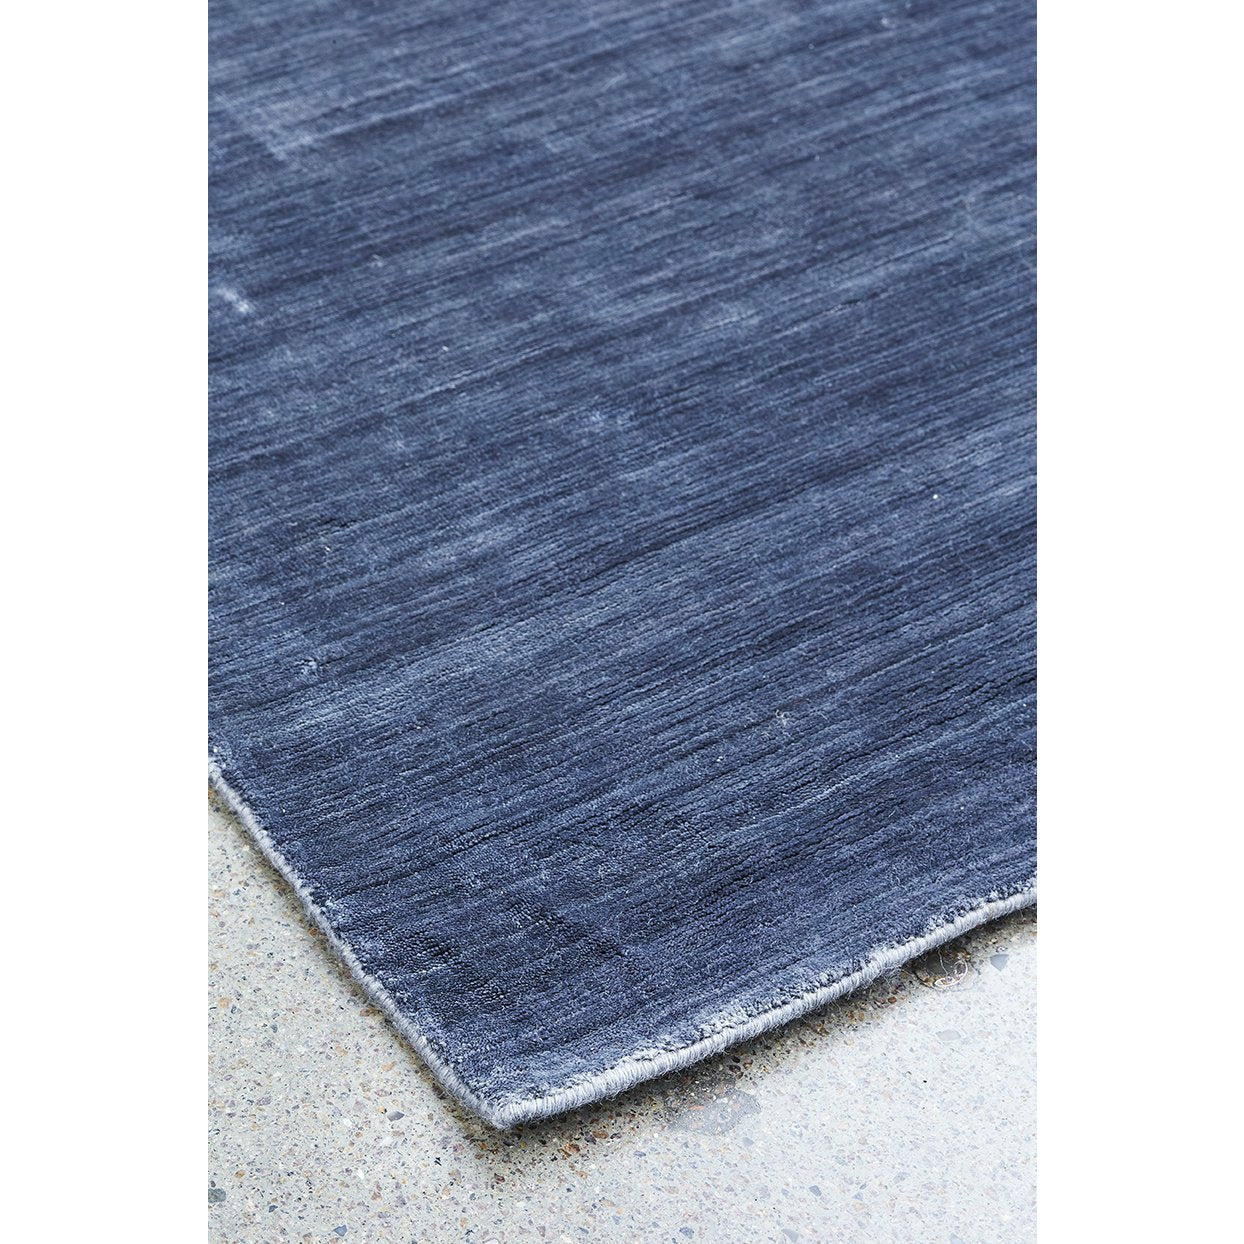 Massimo Bambu mattan stål svart, 170x240 cm